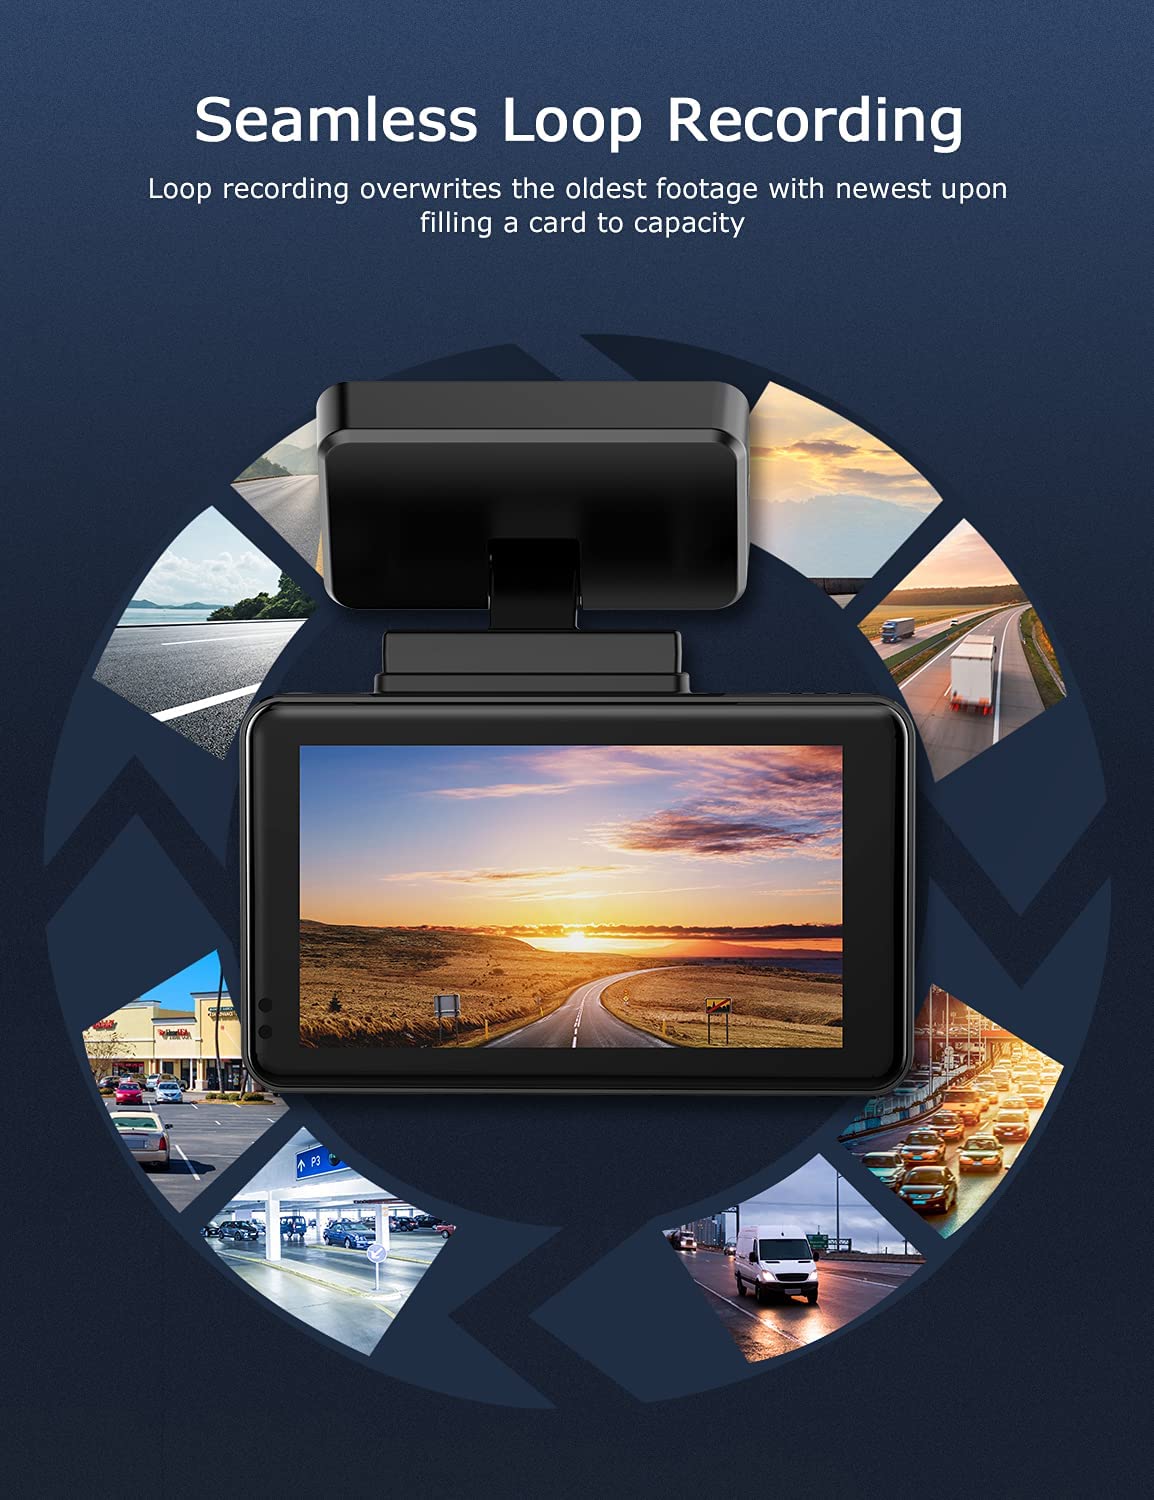 Orskey dash cam 1080p review  orskey s680 dash cam review 